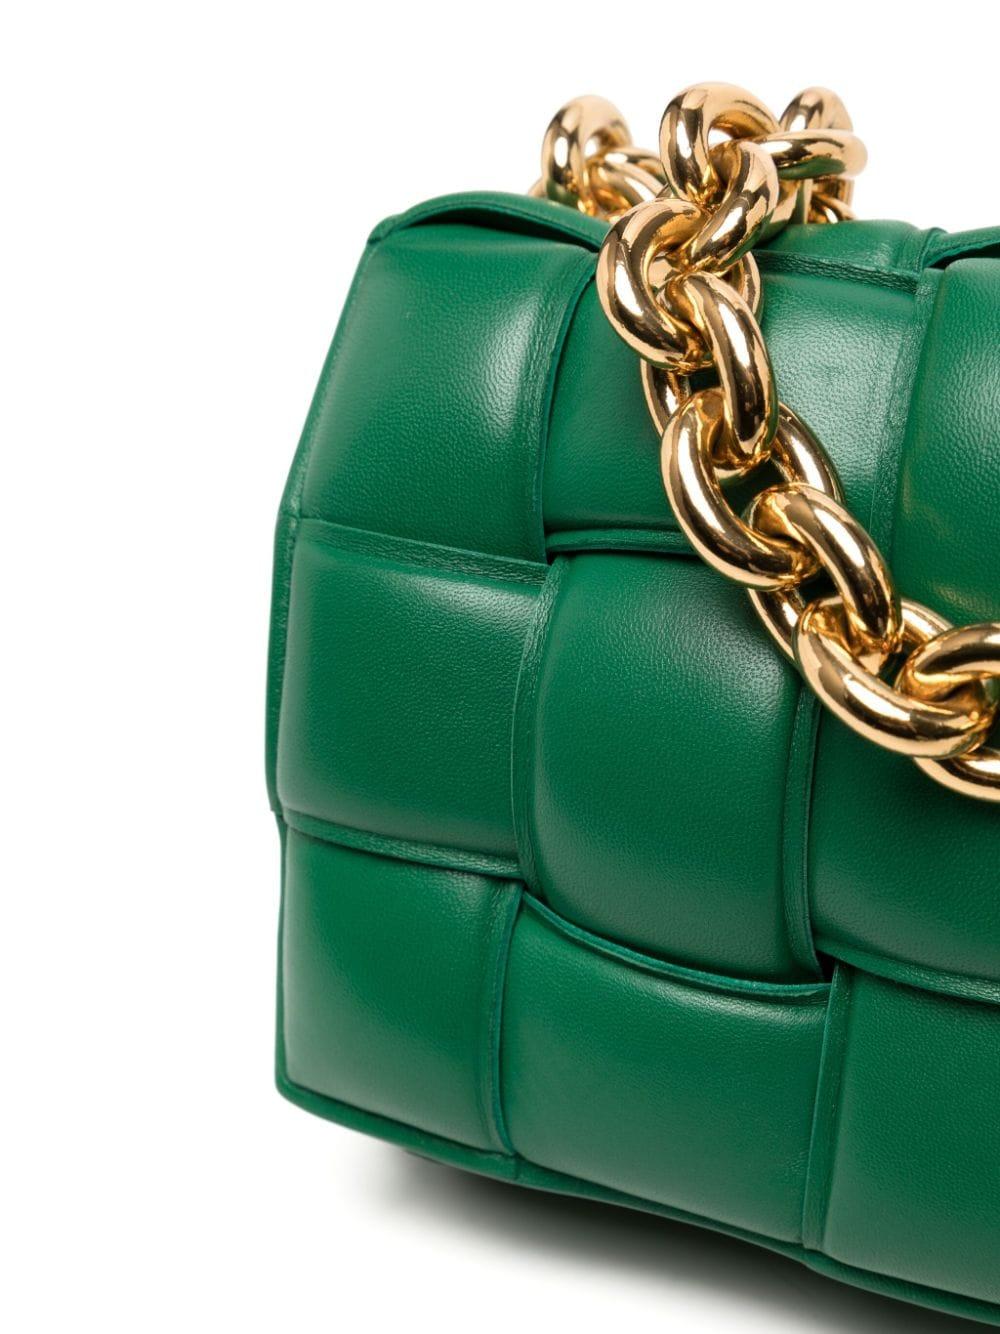 Bottega Veneta Green Chain Cassette Bag In Excellent Condition In London, GB